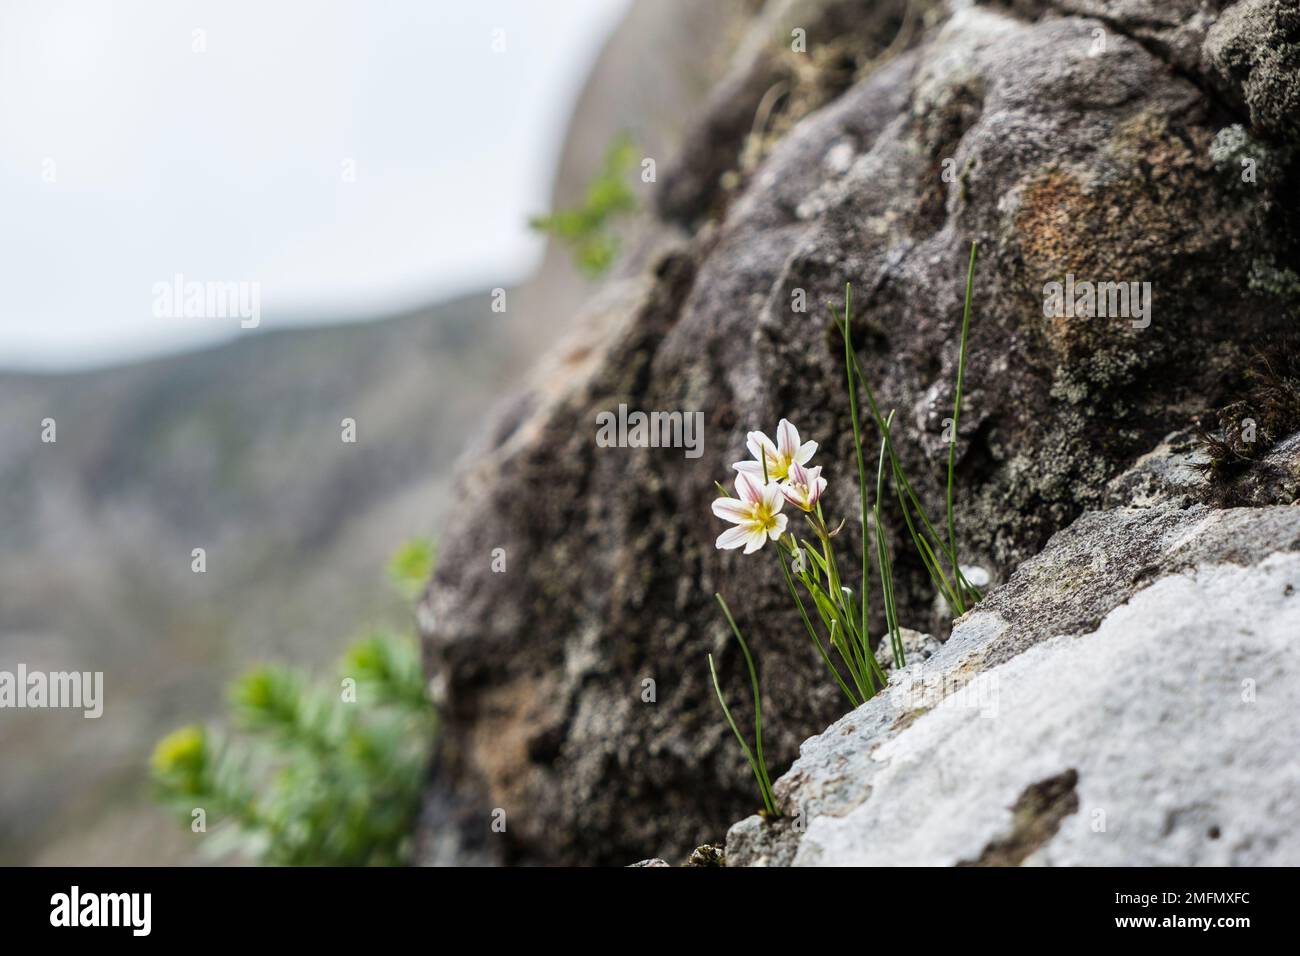 Flowers of the Snowdon Lily (Gagea serotina or Lloydia serotina) flowering on rocks on slopes of Mount Snowdon in mountains of Snowdonia National Park Stock Photo